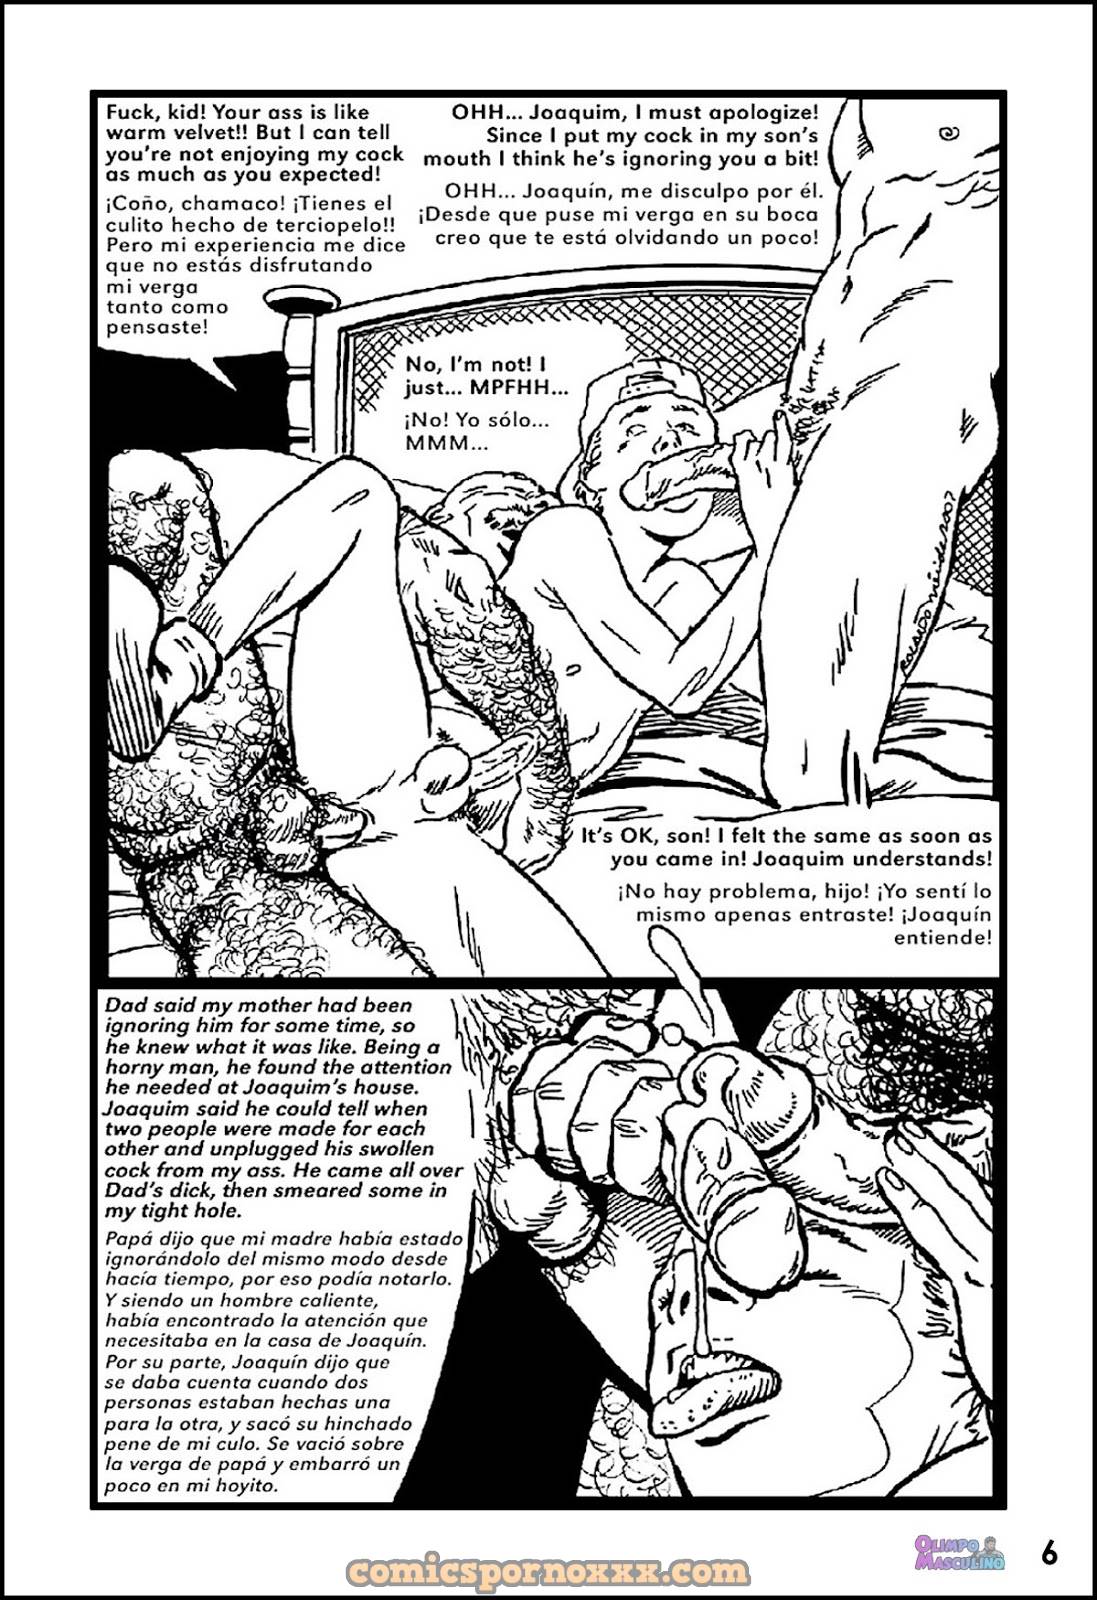 Joaquin lo Hizo de Nuevo - 6 - Comics Porno - Hentai Manga - Cartoon XXX